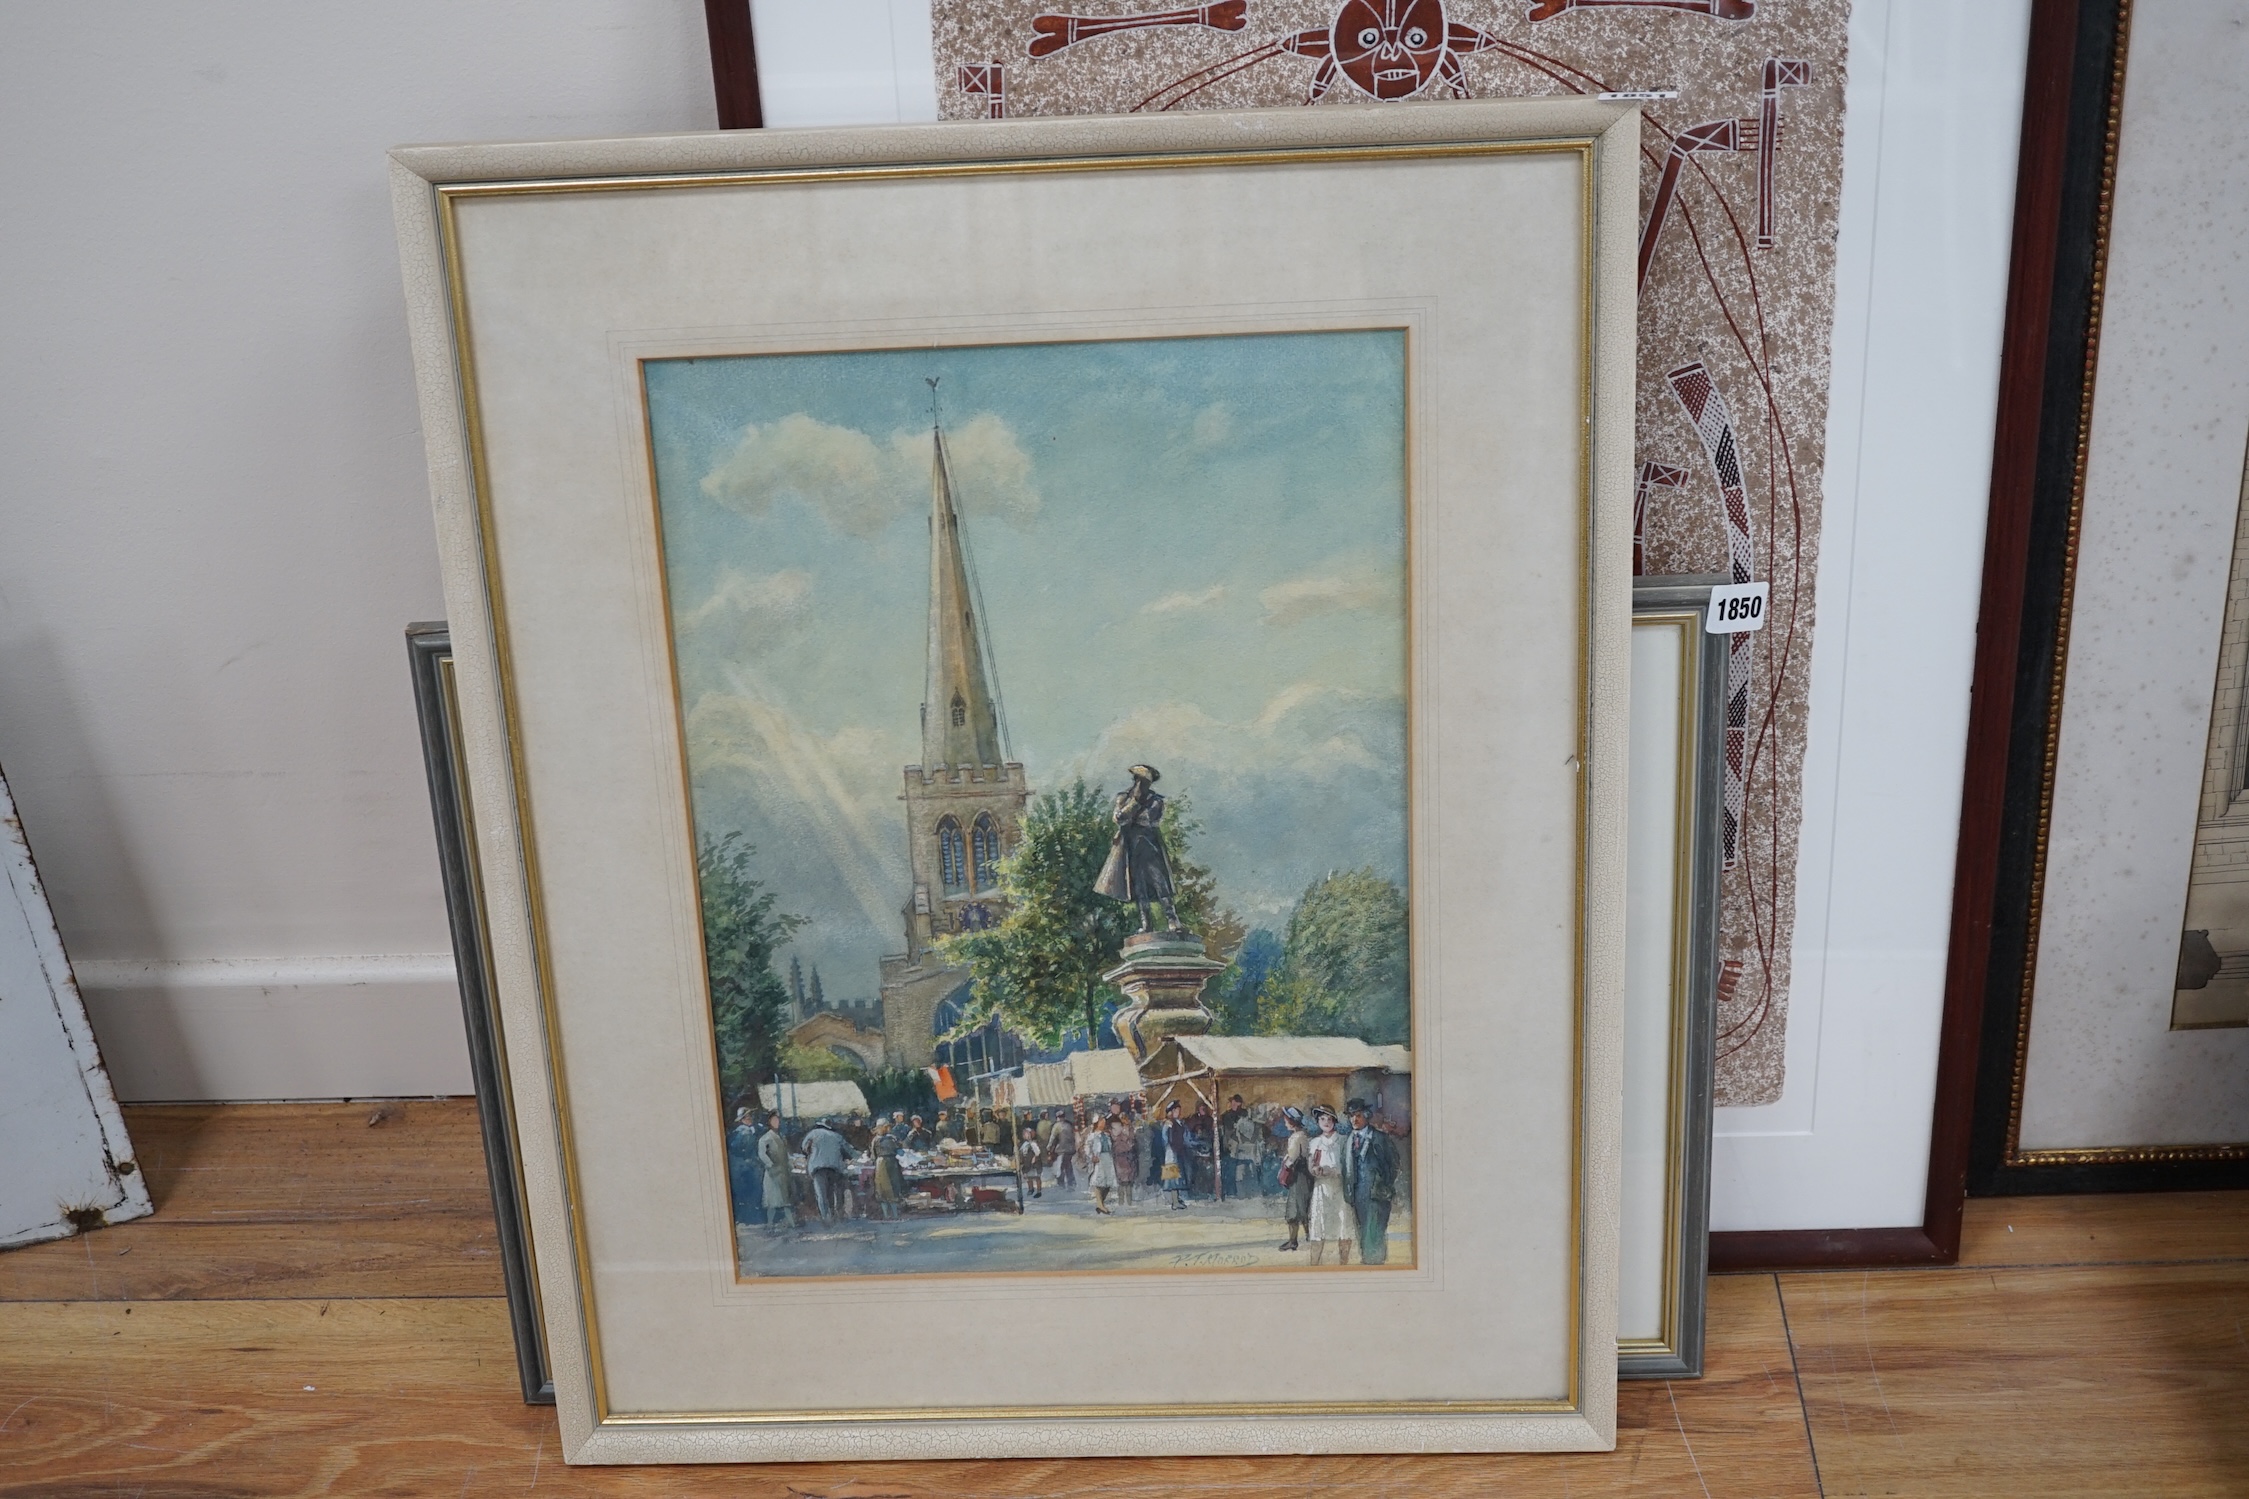 P T Morrod, watercolour, Market scene before a church, signed, 45 x 31.5cm. Condition - fair